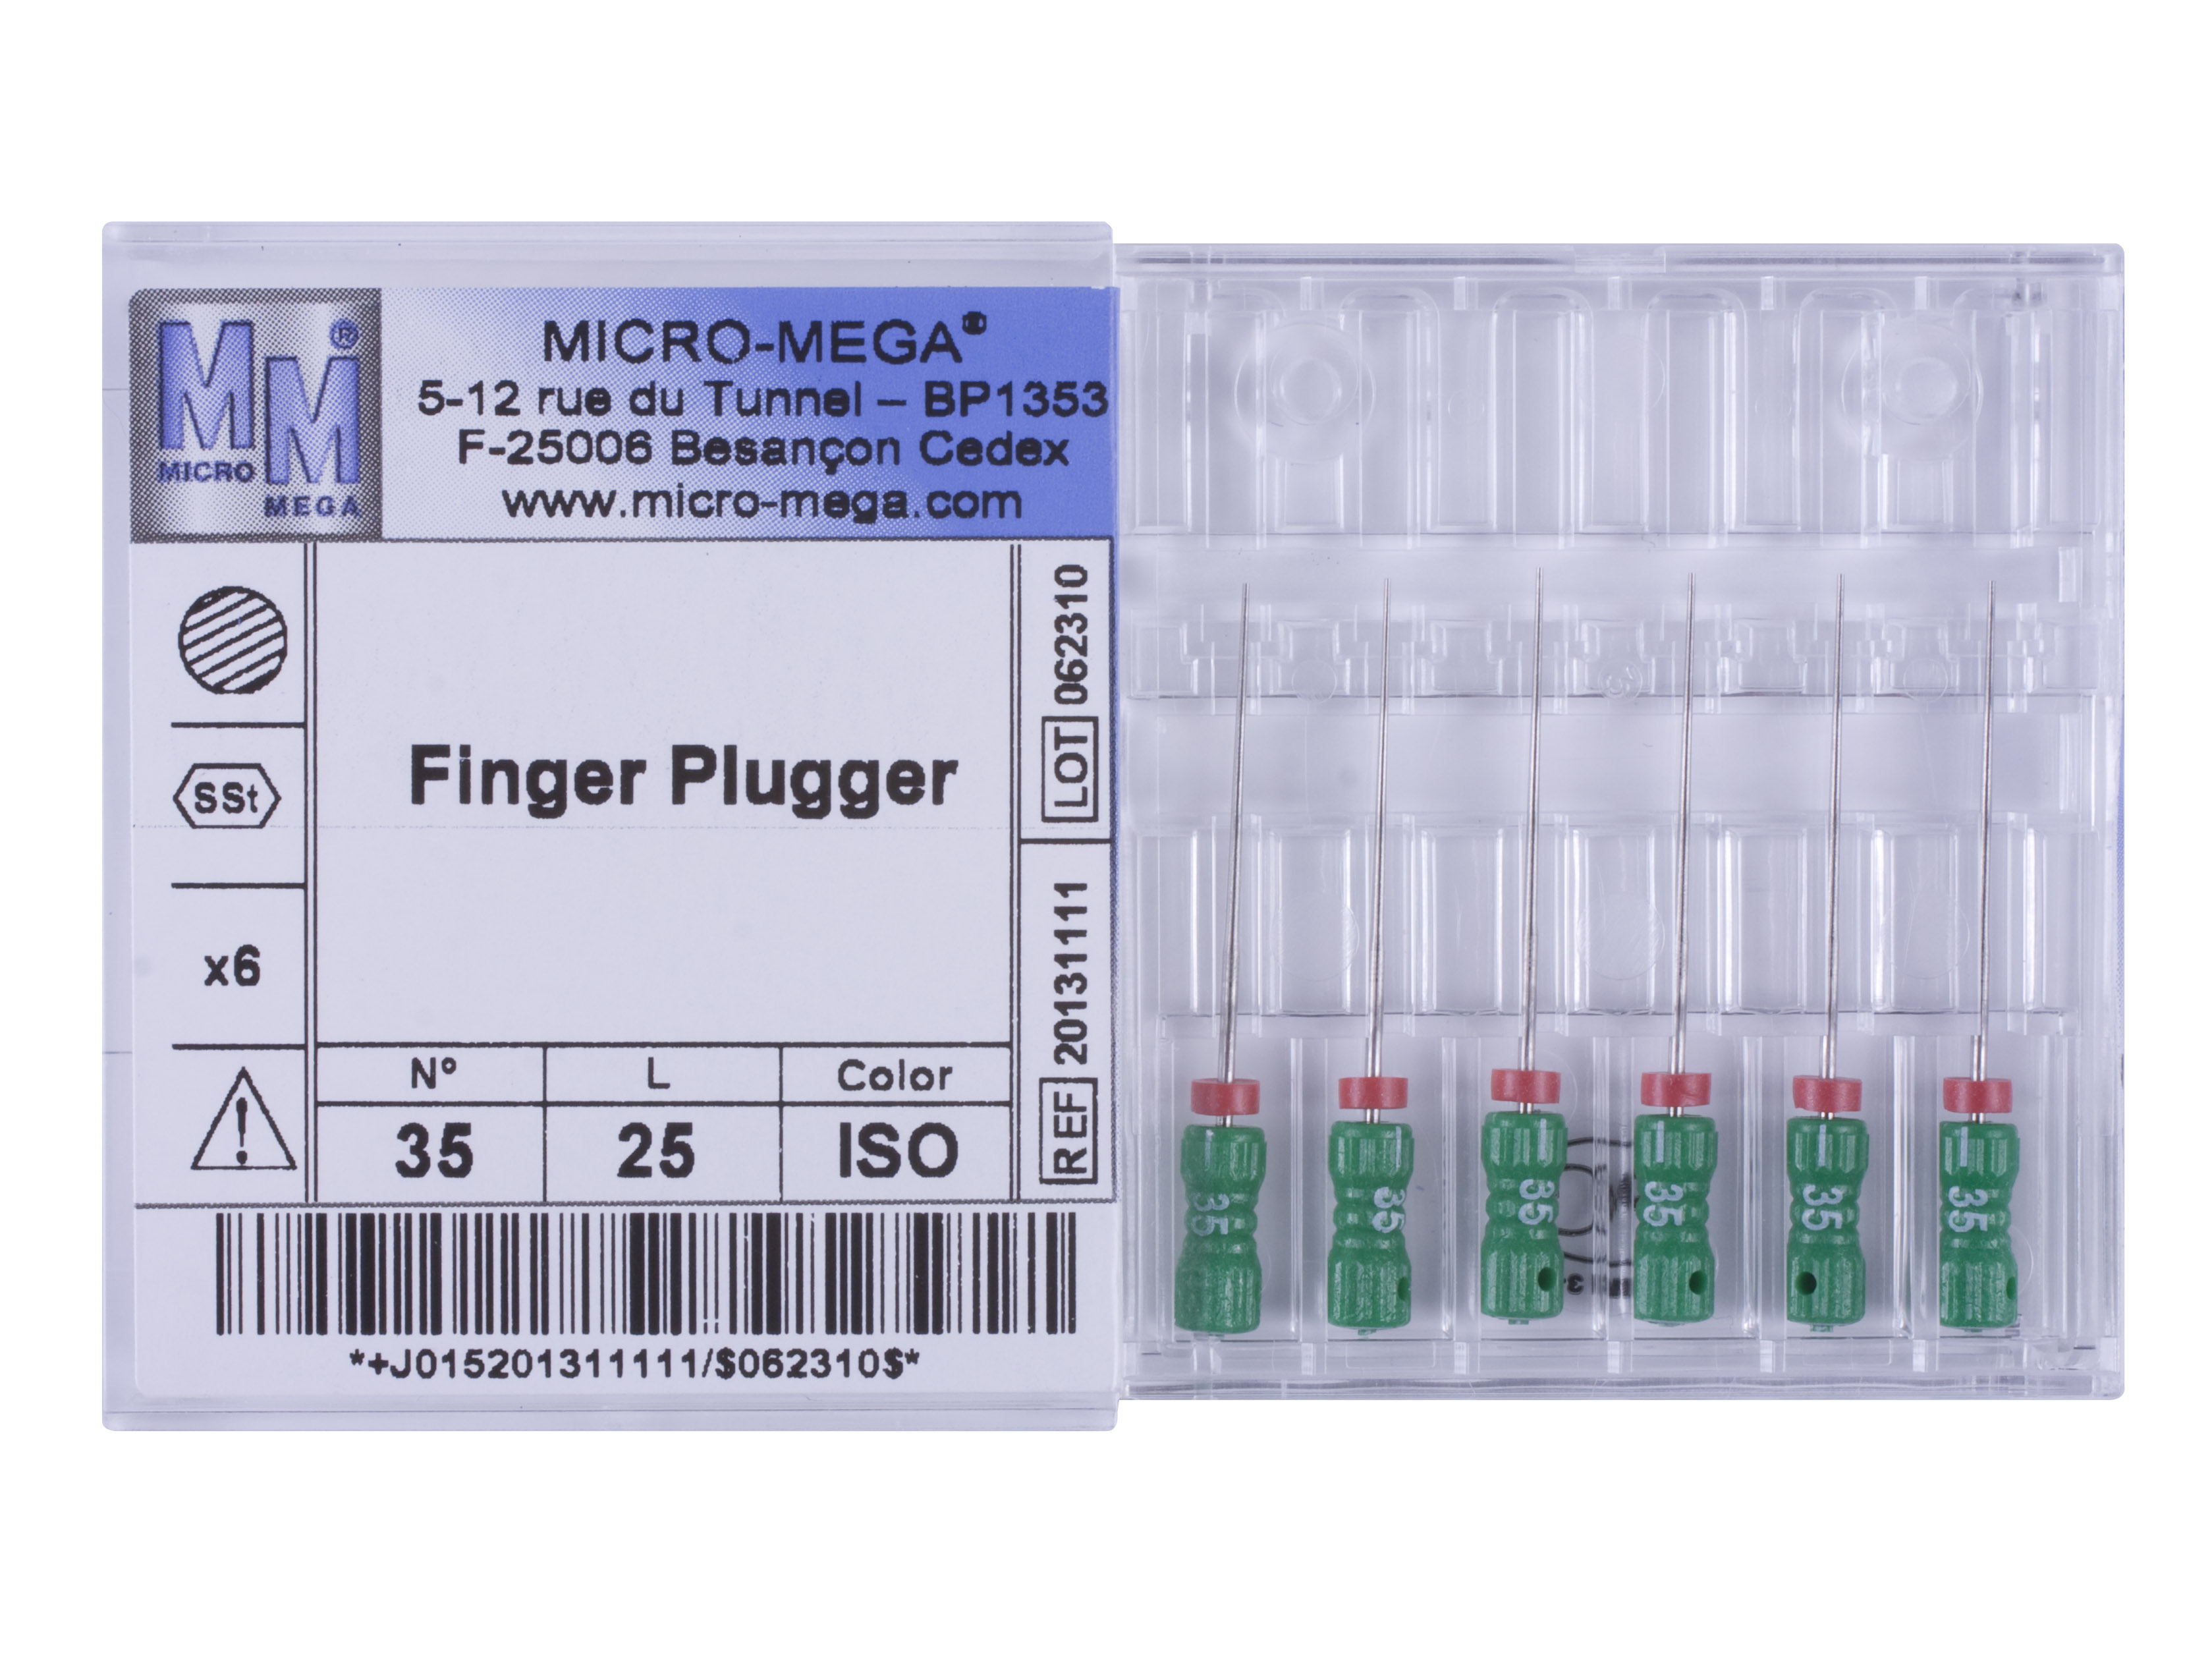 Finger Plugger n35 L25 2% (steel) - инструменты эндодонтические